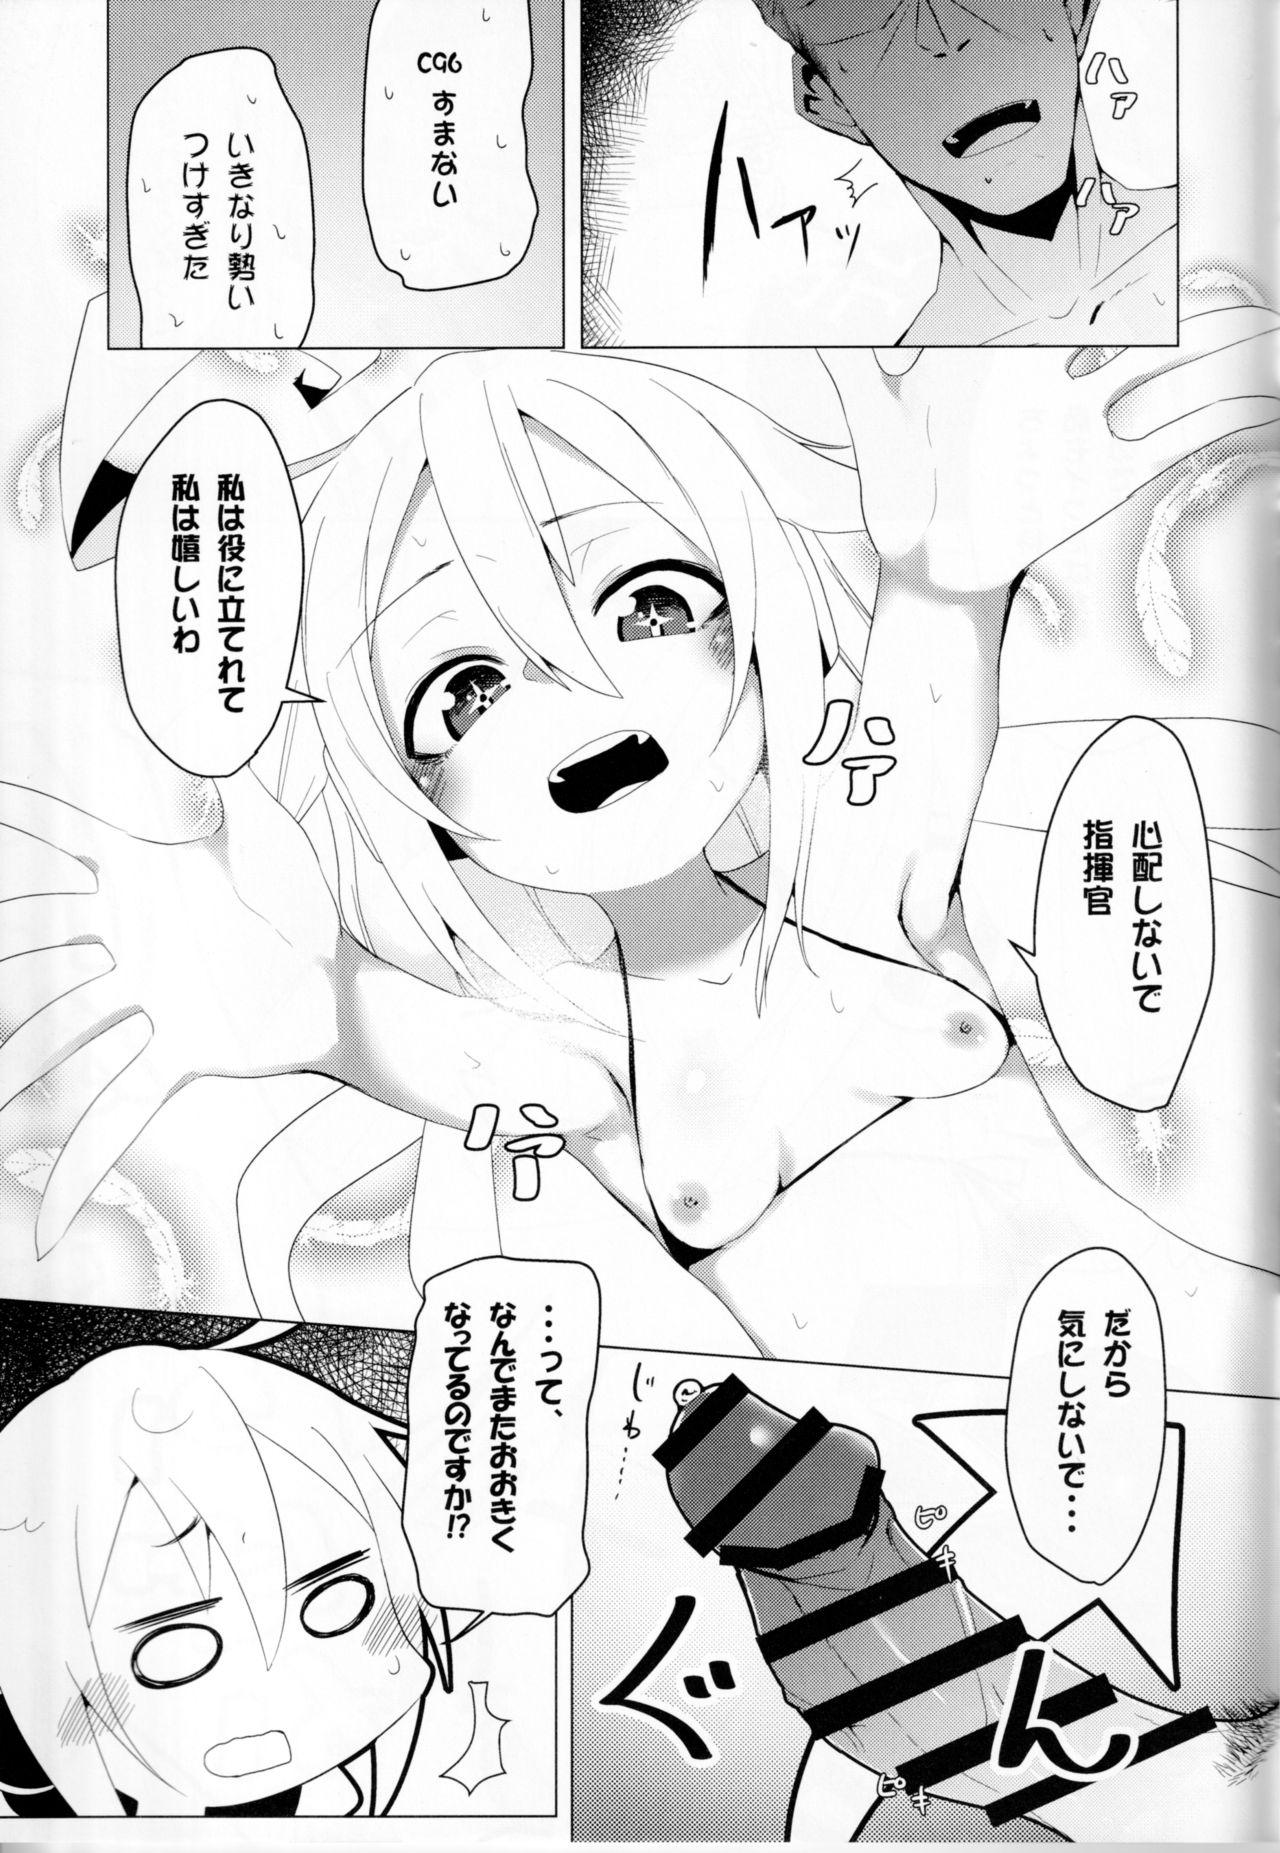 College C96-chan wa Atsu gari! - Girls frontline Village - Page 12